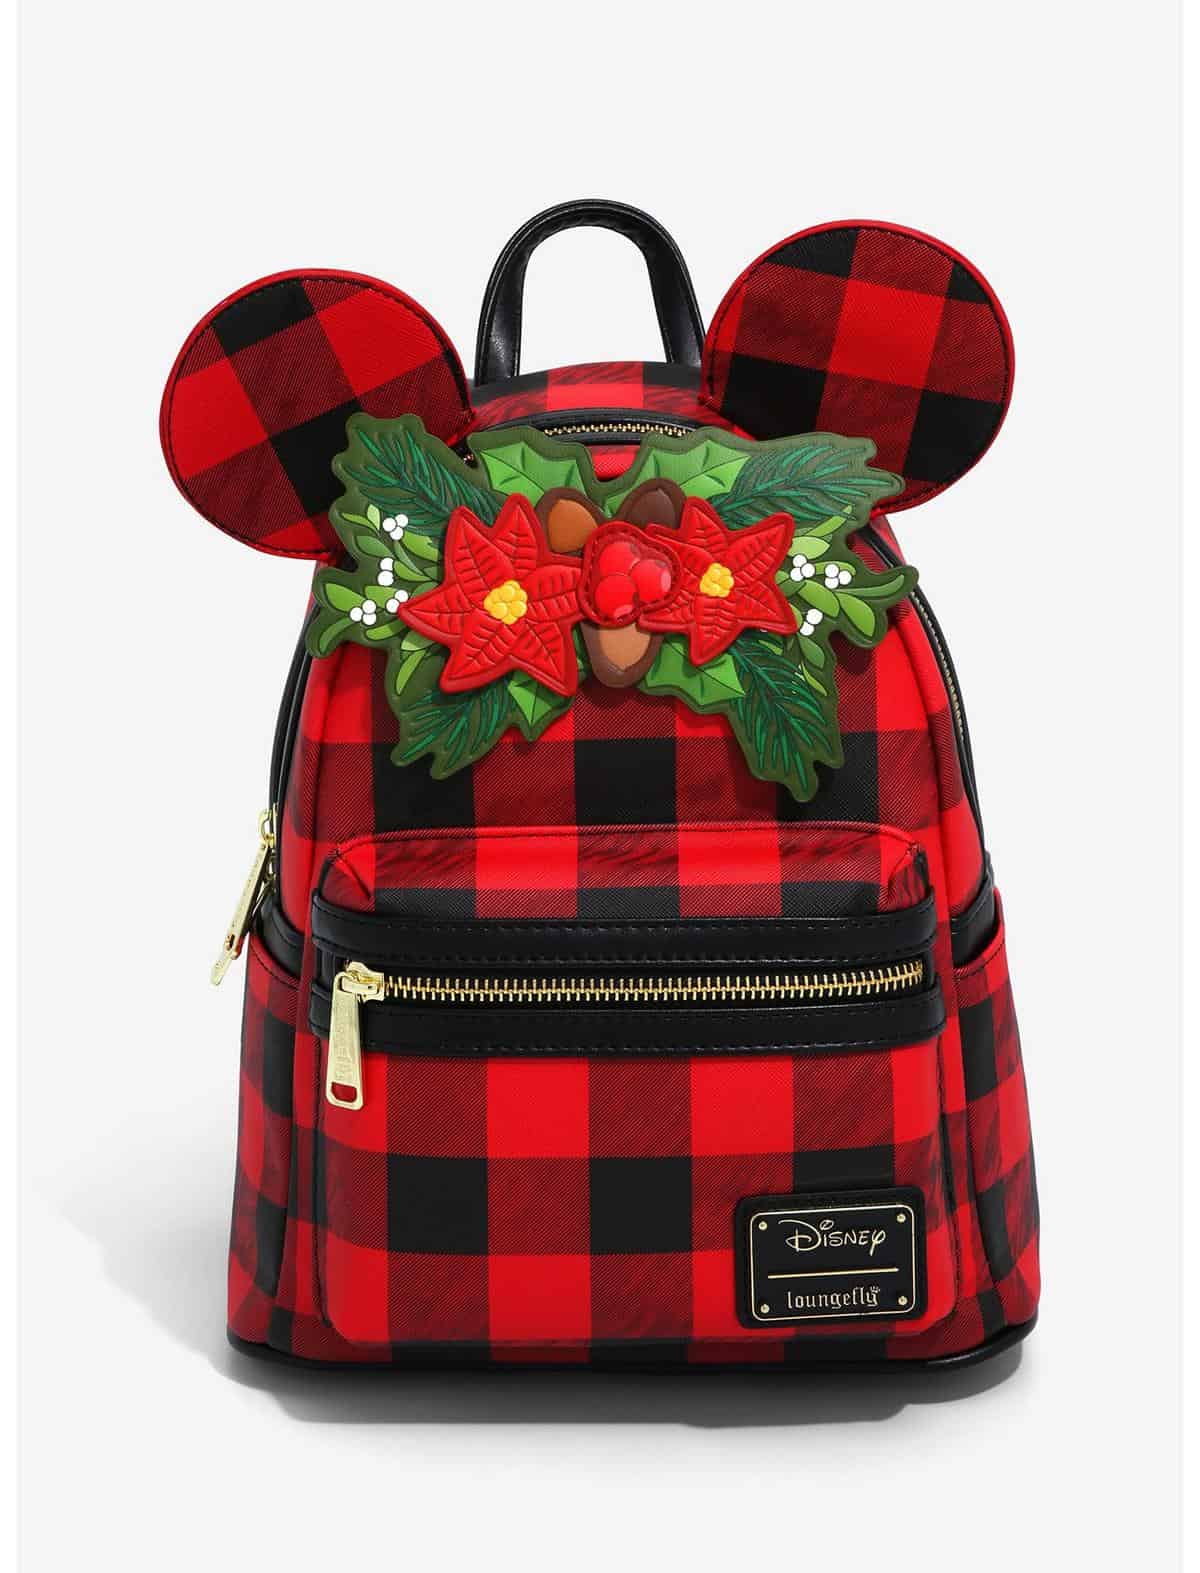 Disney Christmas Loungefly for the Holiday Season